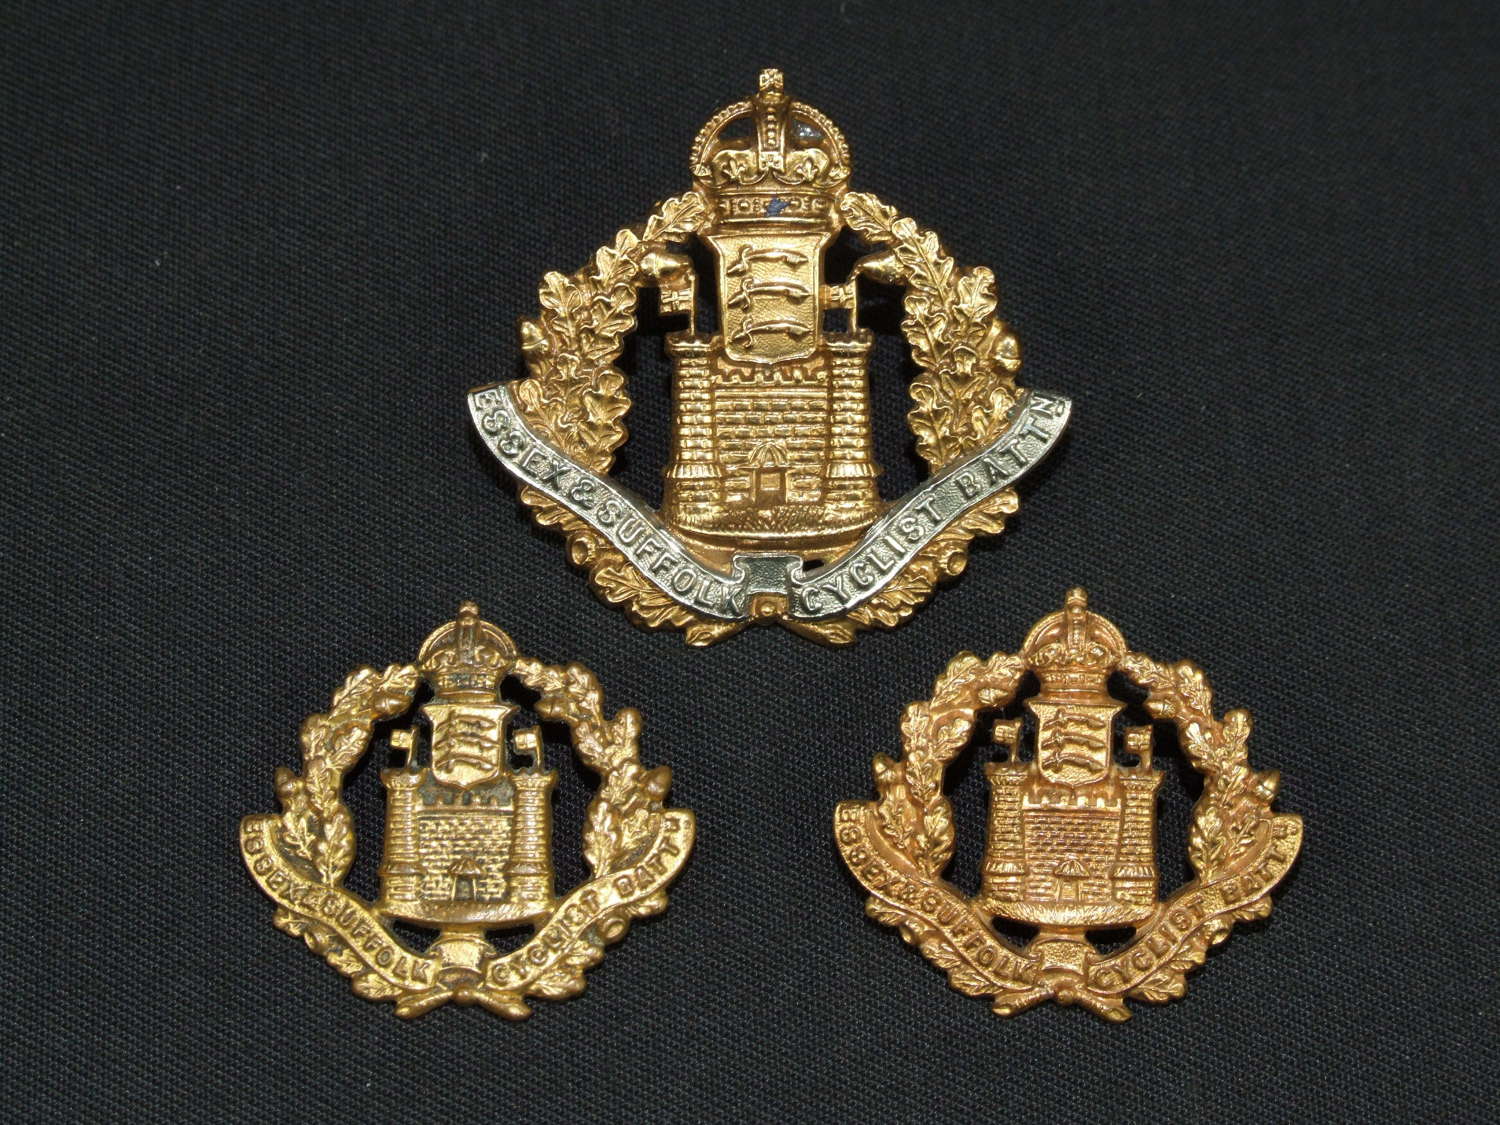 Essex & Suffolk Cyclist Battalion cap badge & Collar Badges